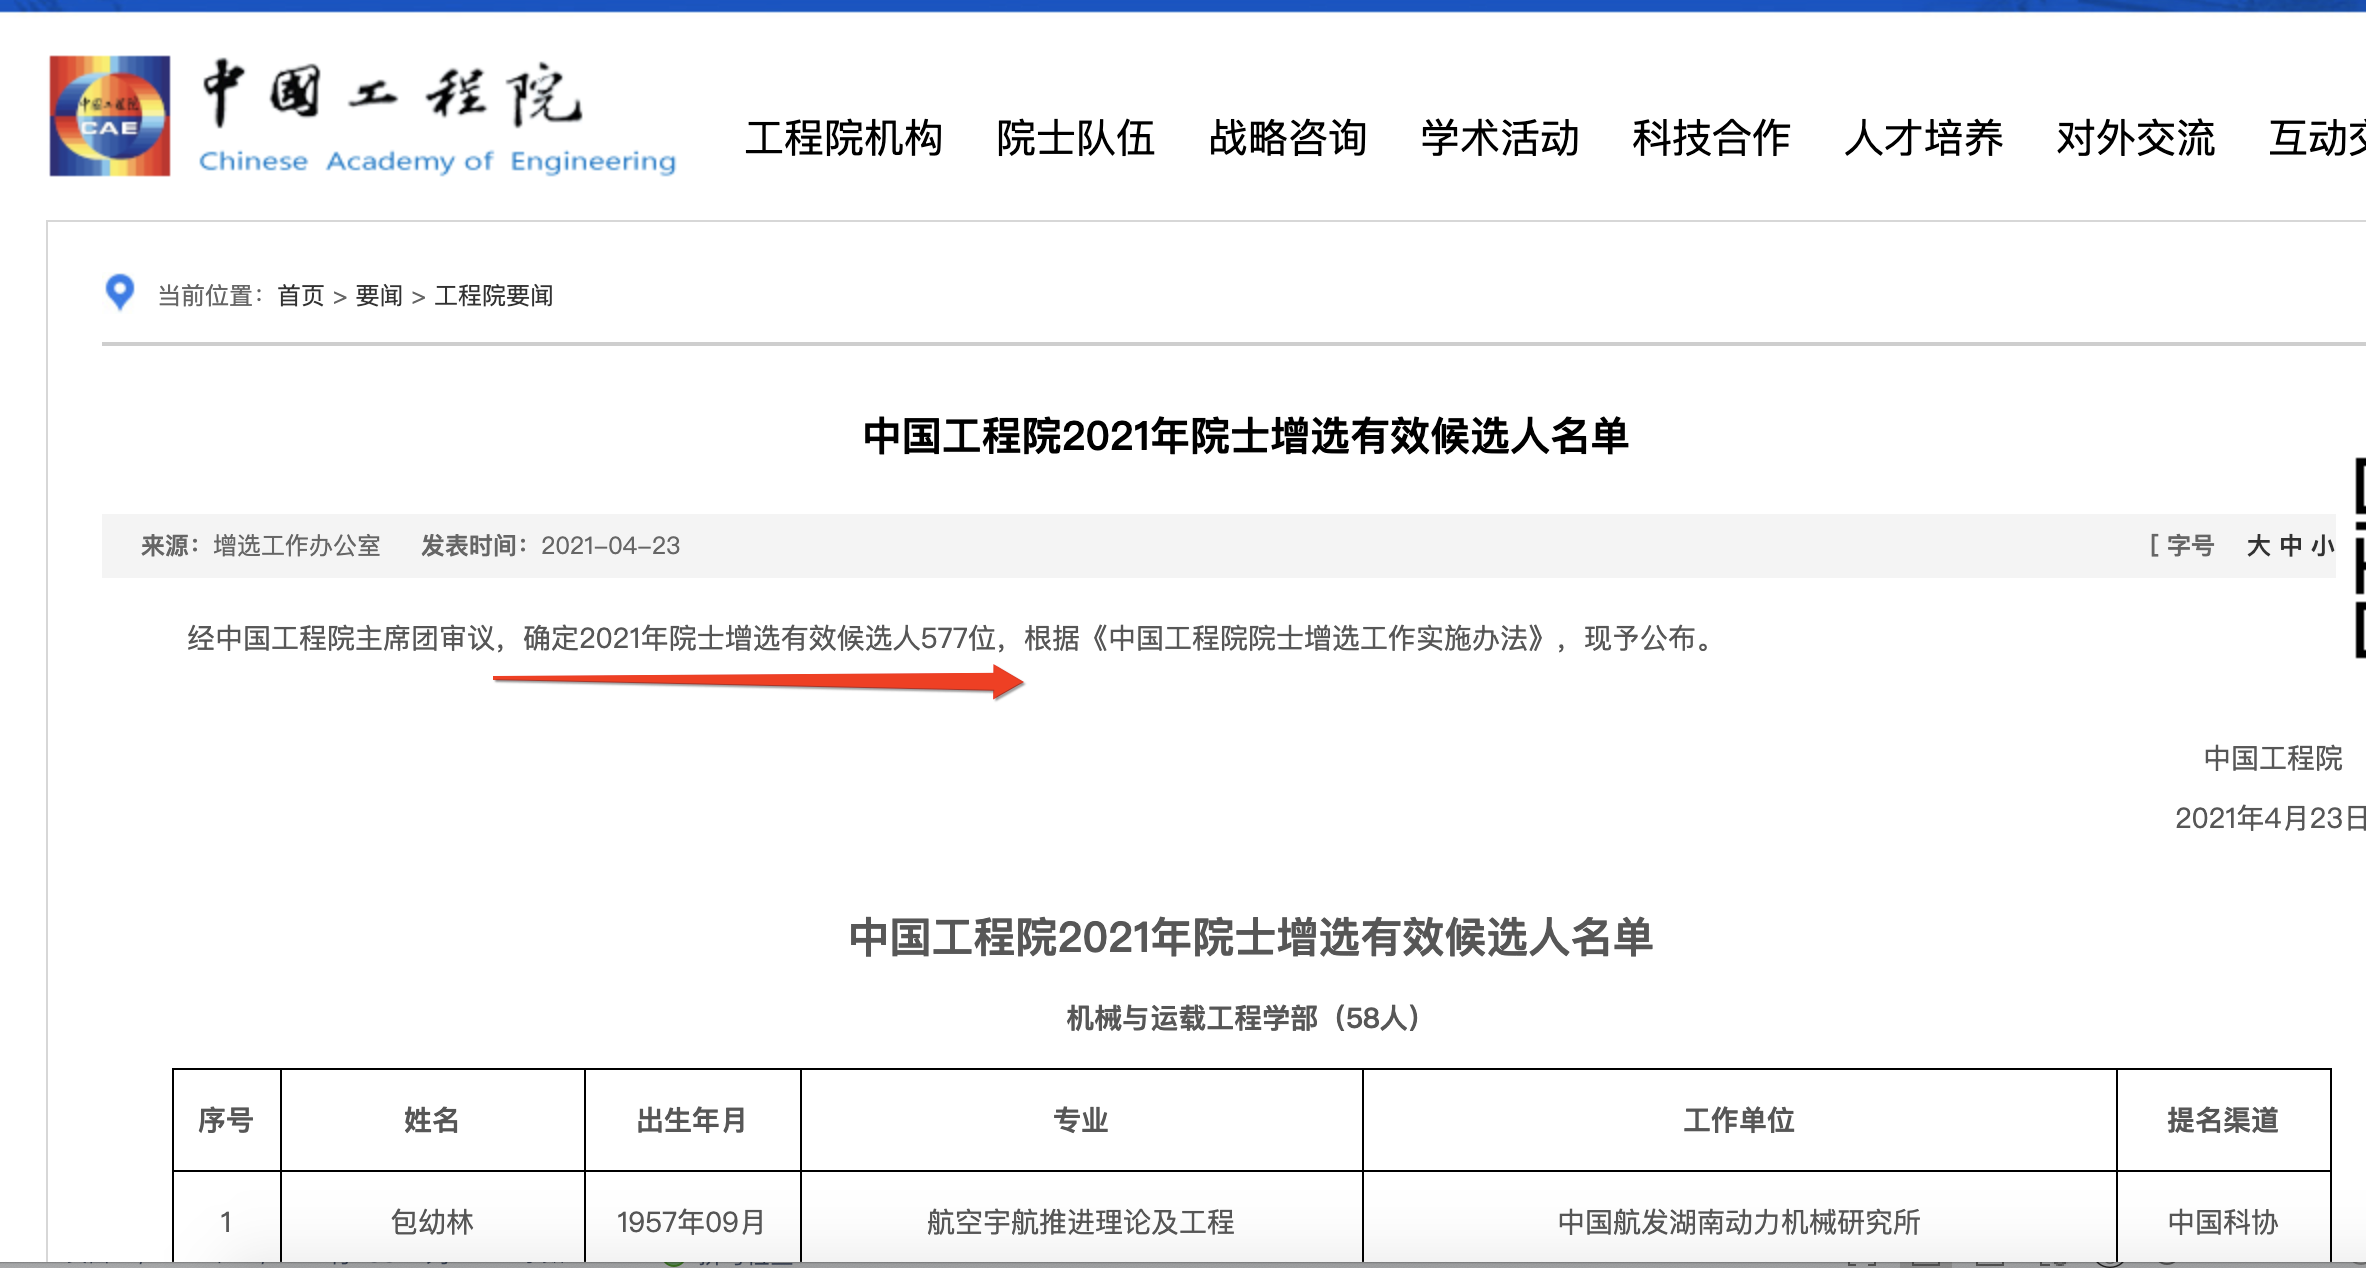 中国工程院2021年院士增选577位有效<font color="red">候选人</font>名单公布，其中医药卫生部84位有效<font color="red">候选人</font>